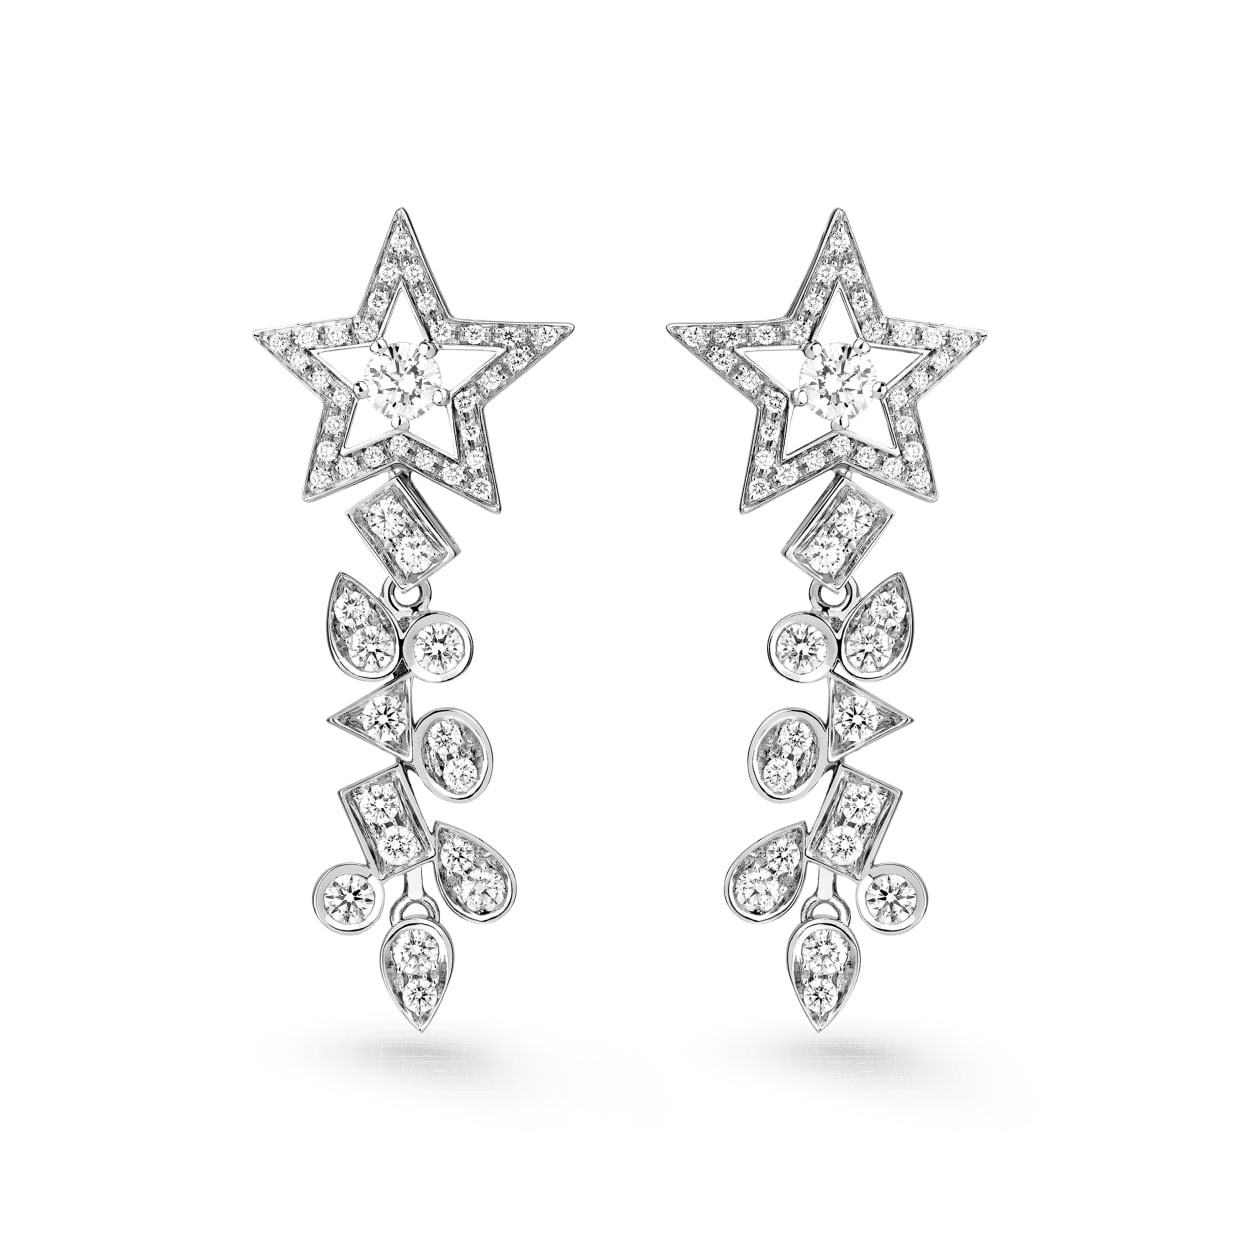 OEM/ODM Jewelry Custom Design Sterling Silver jewelry earring manufacturer